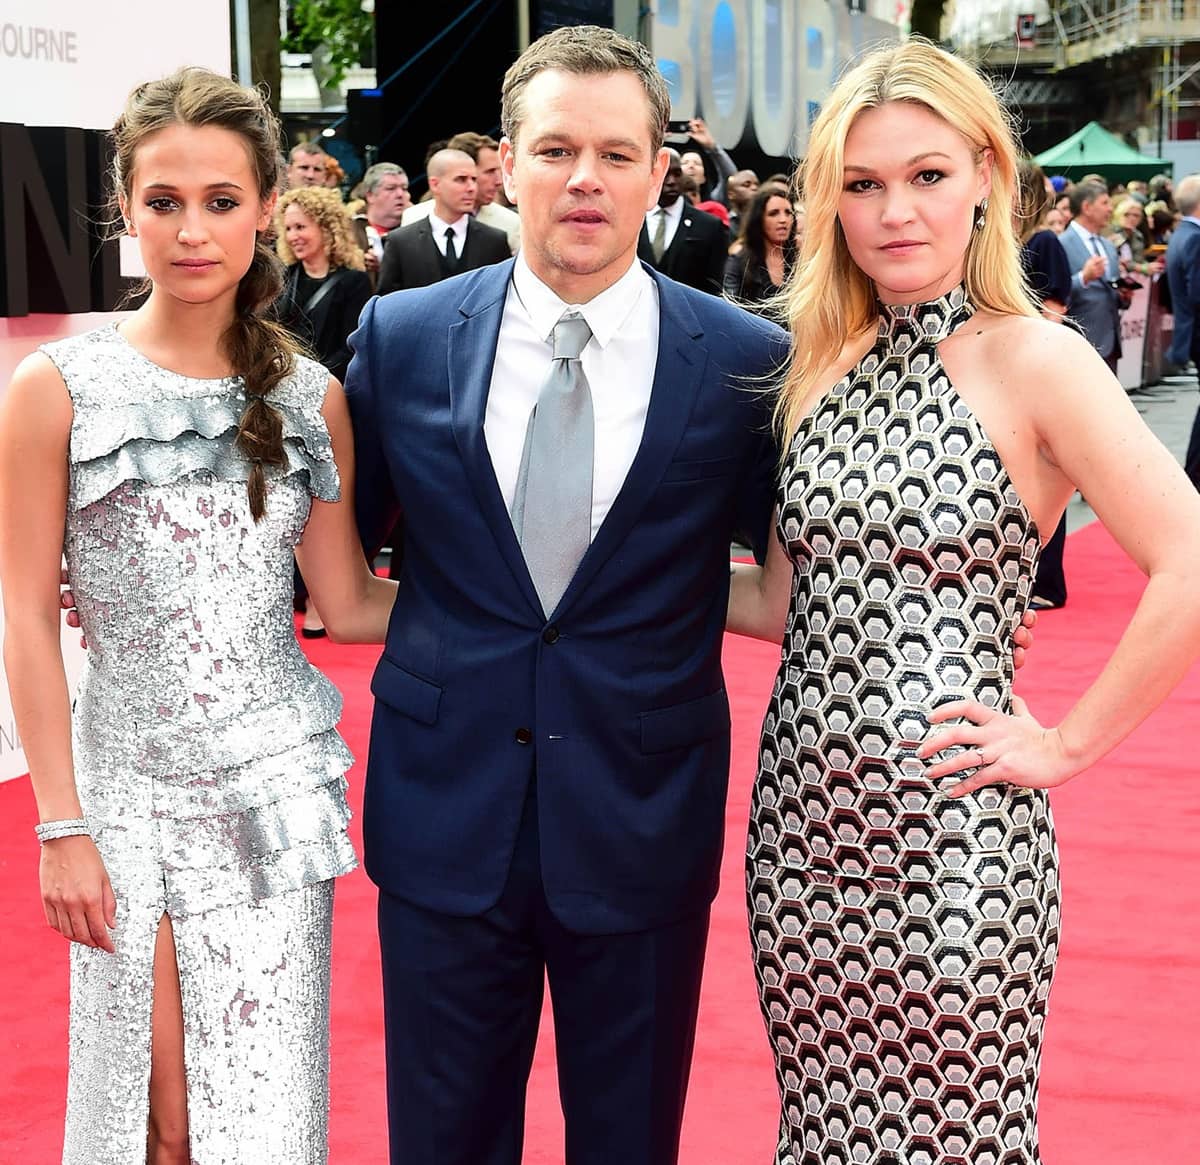 Matt Damon was 45 years old, Alicia Vikander was 27 years old, and Julia Stiles was 25 years old when "Jason Bourne" premiered in London on July 11, 2016